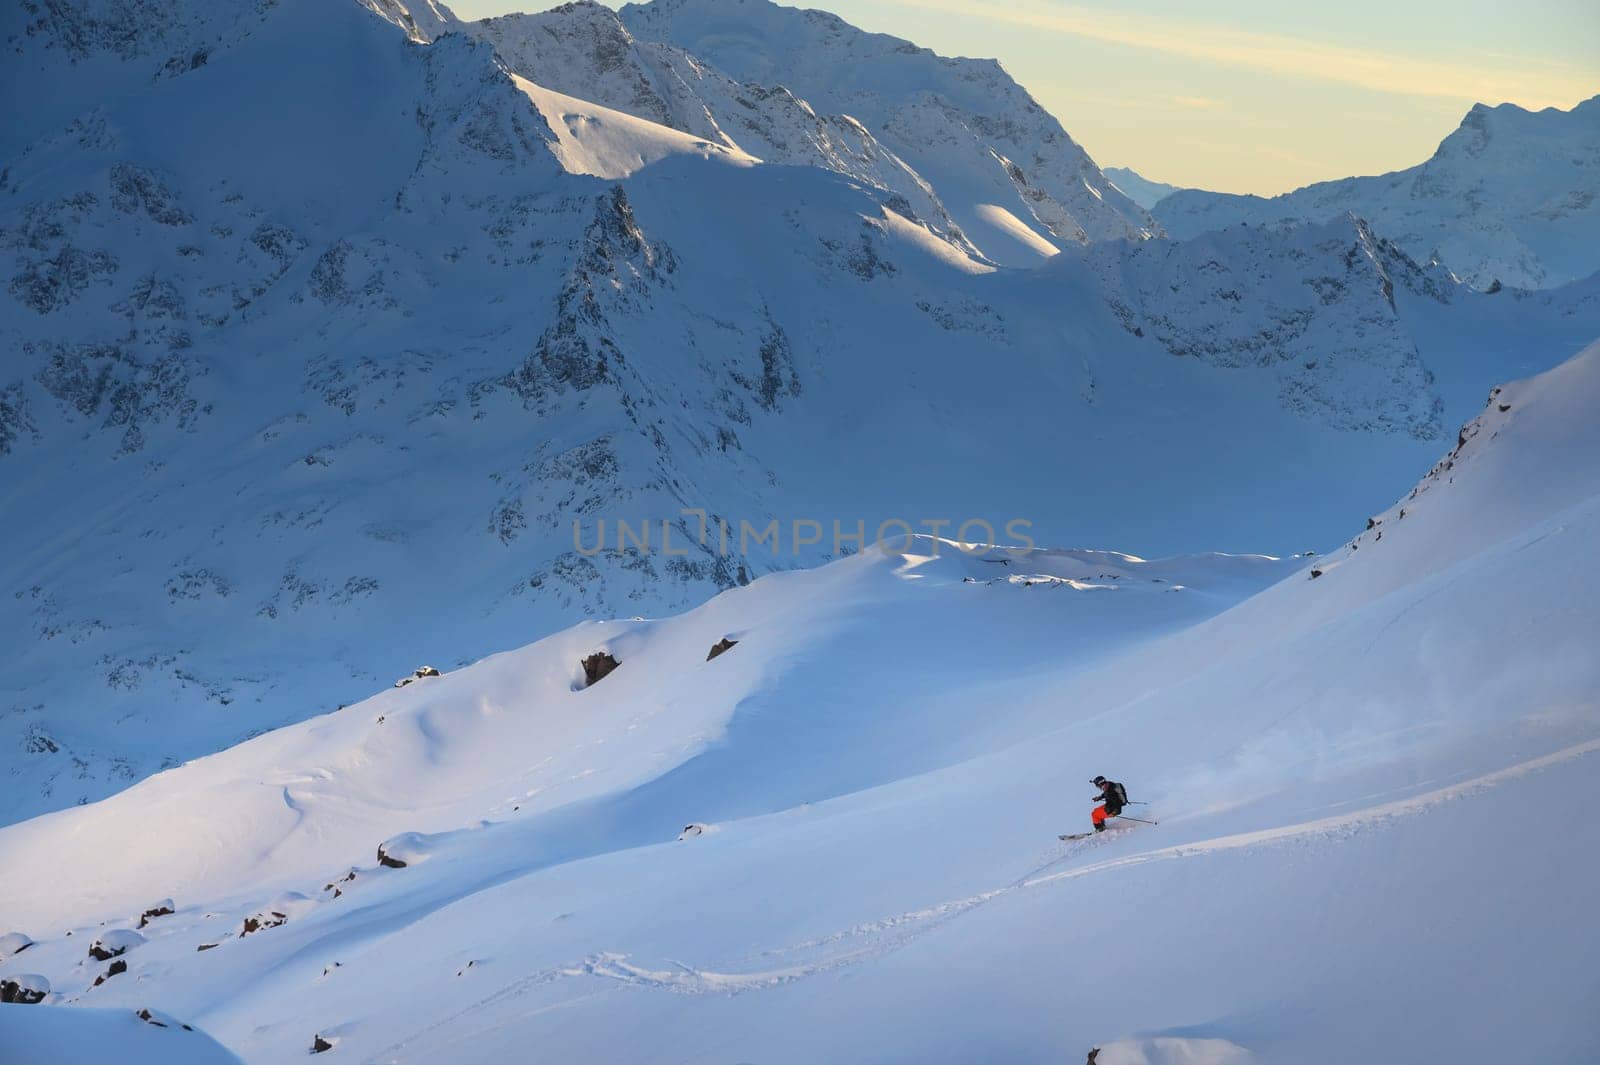 Freerider skier down the powder snow at sunset, italian alps. Skier at ski resort off-piste, colorful winter sunset by yanik88